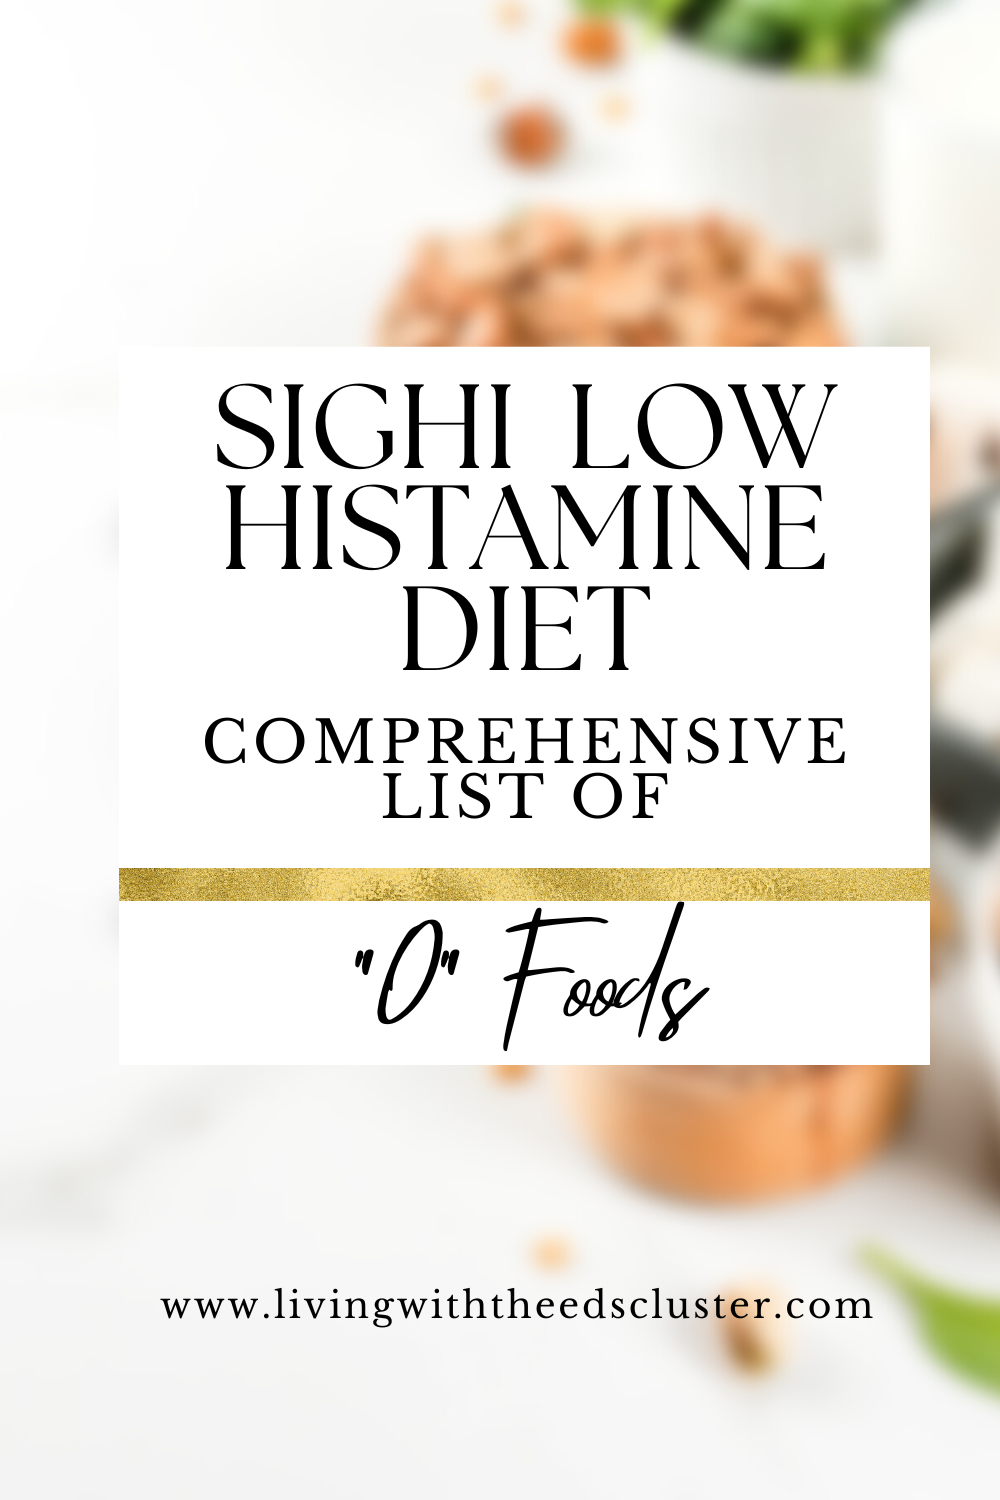 SIGHI Low Histamine 0 Foods Comprehensive List